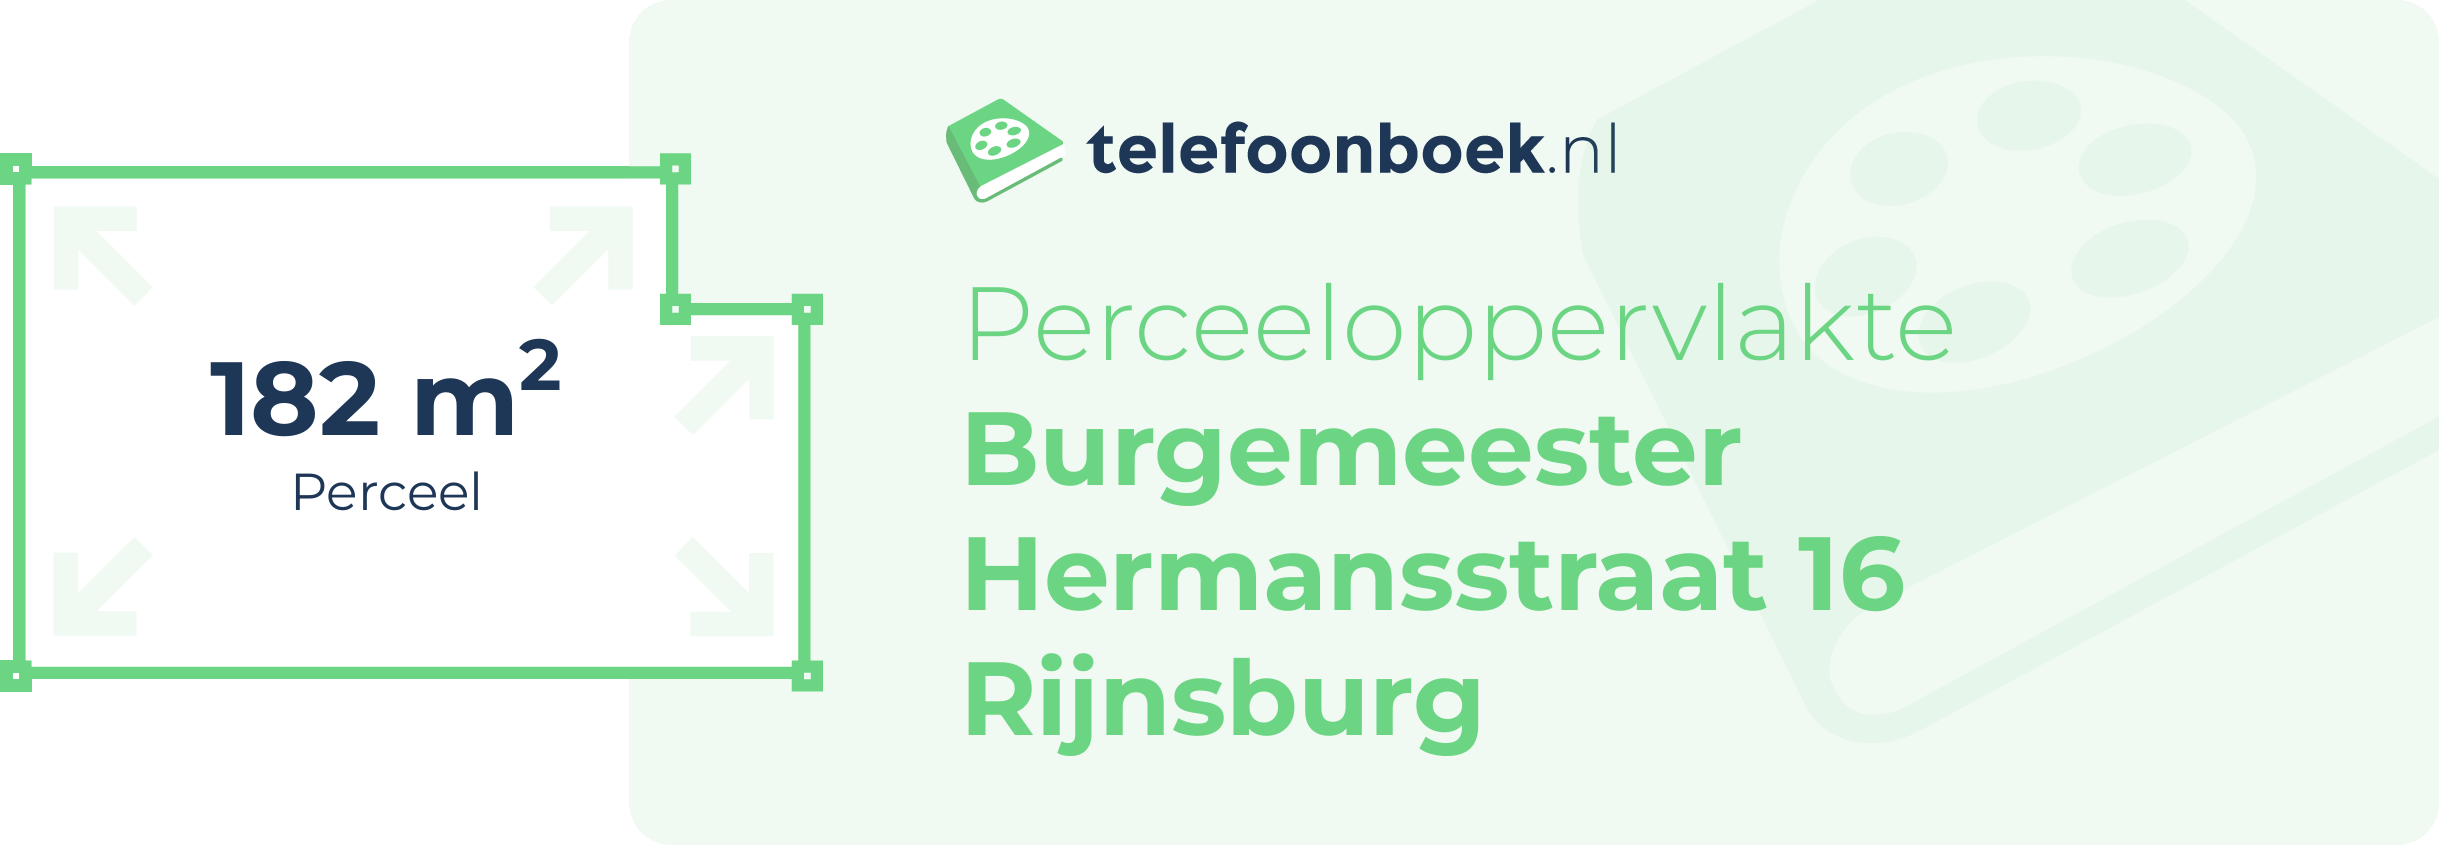 Perceeloppervlakte Burgemeester Hermansstraat 16 Rijnsburg